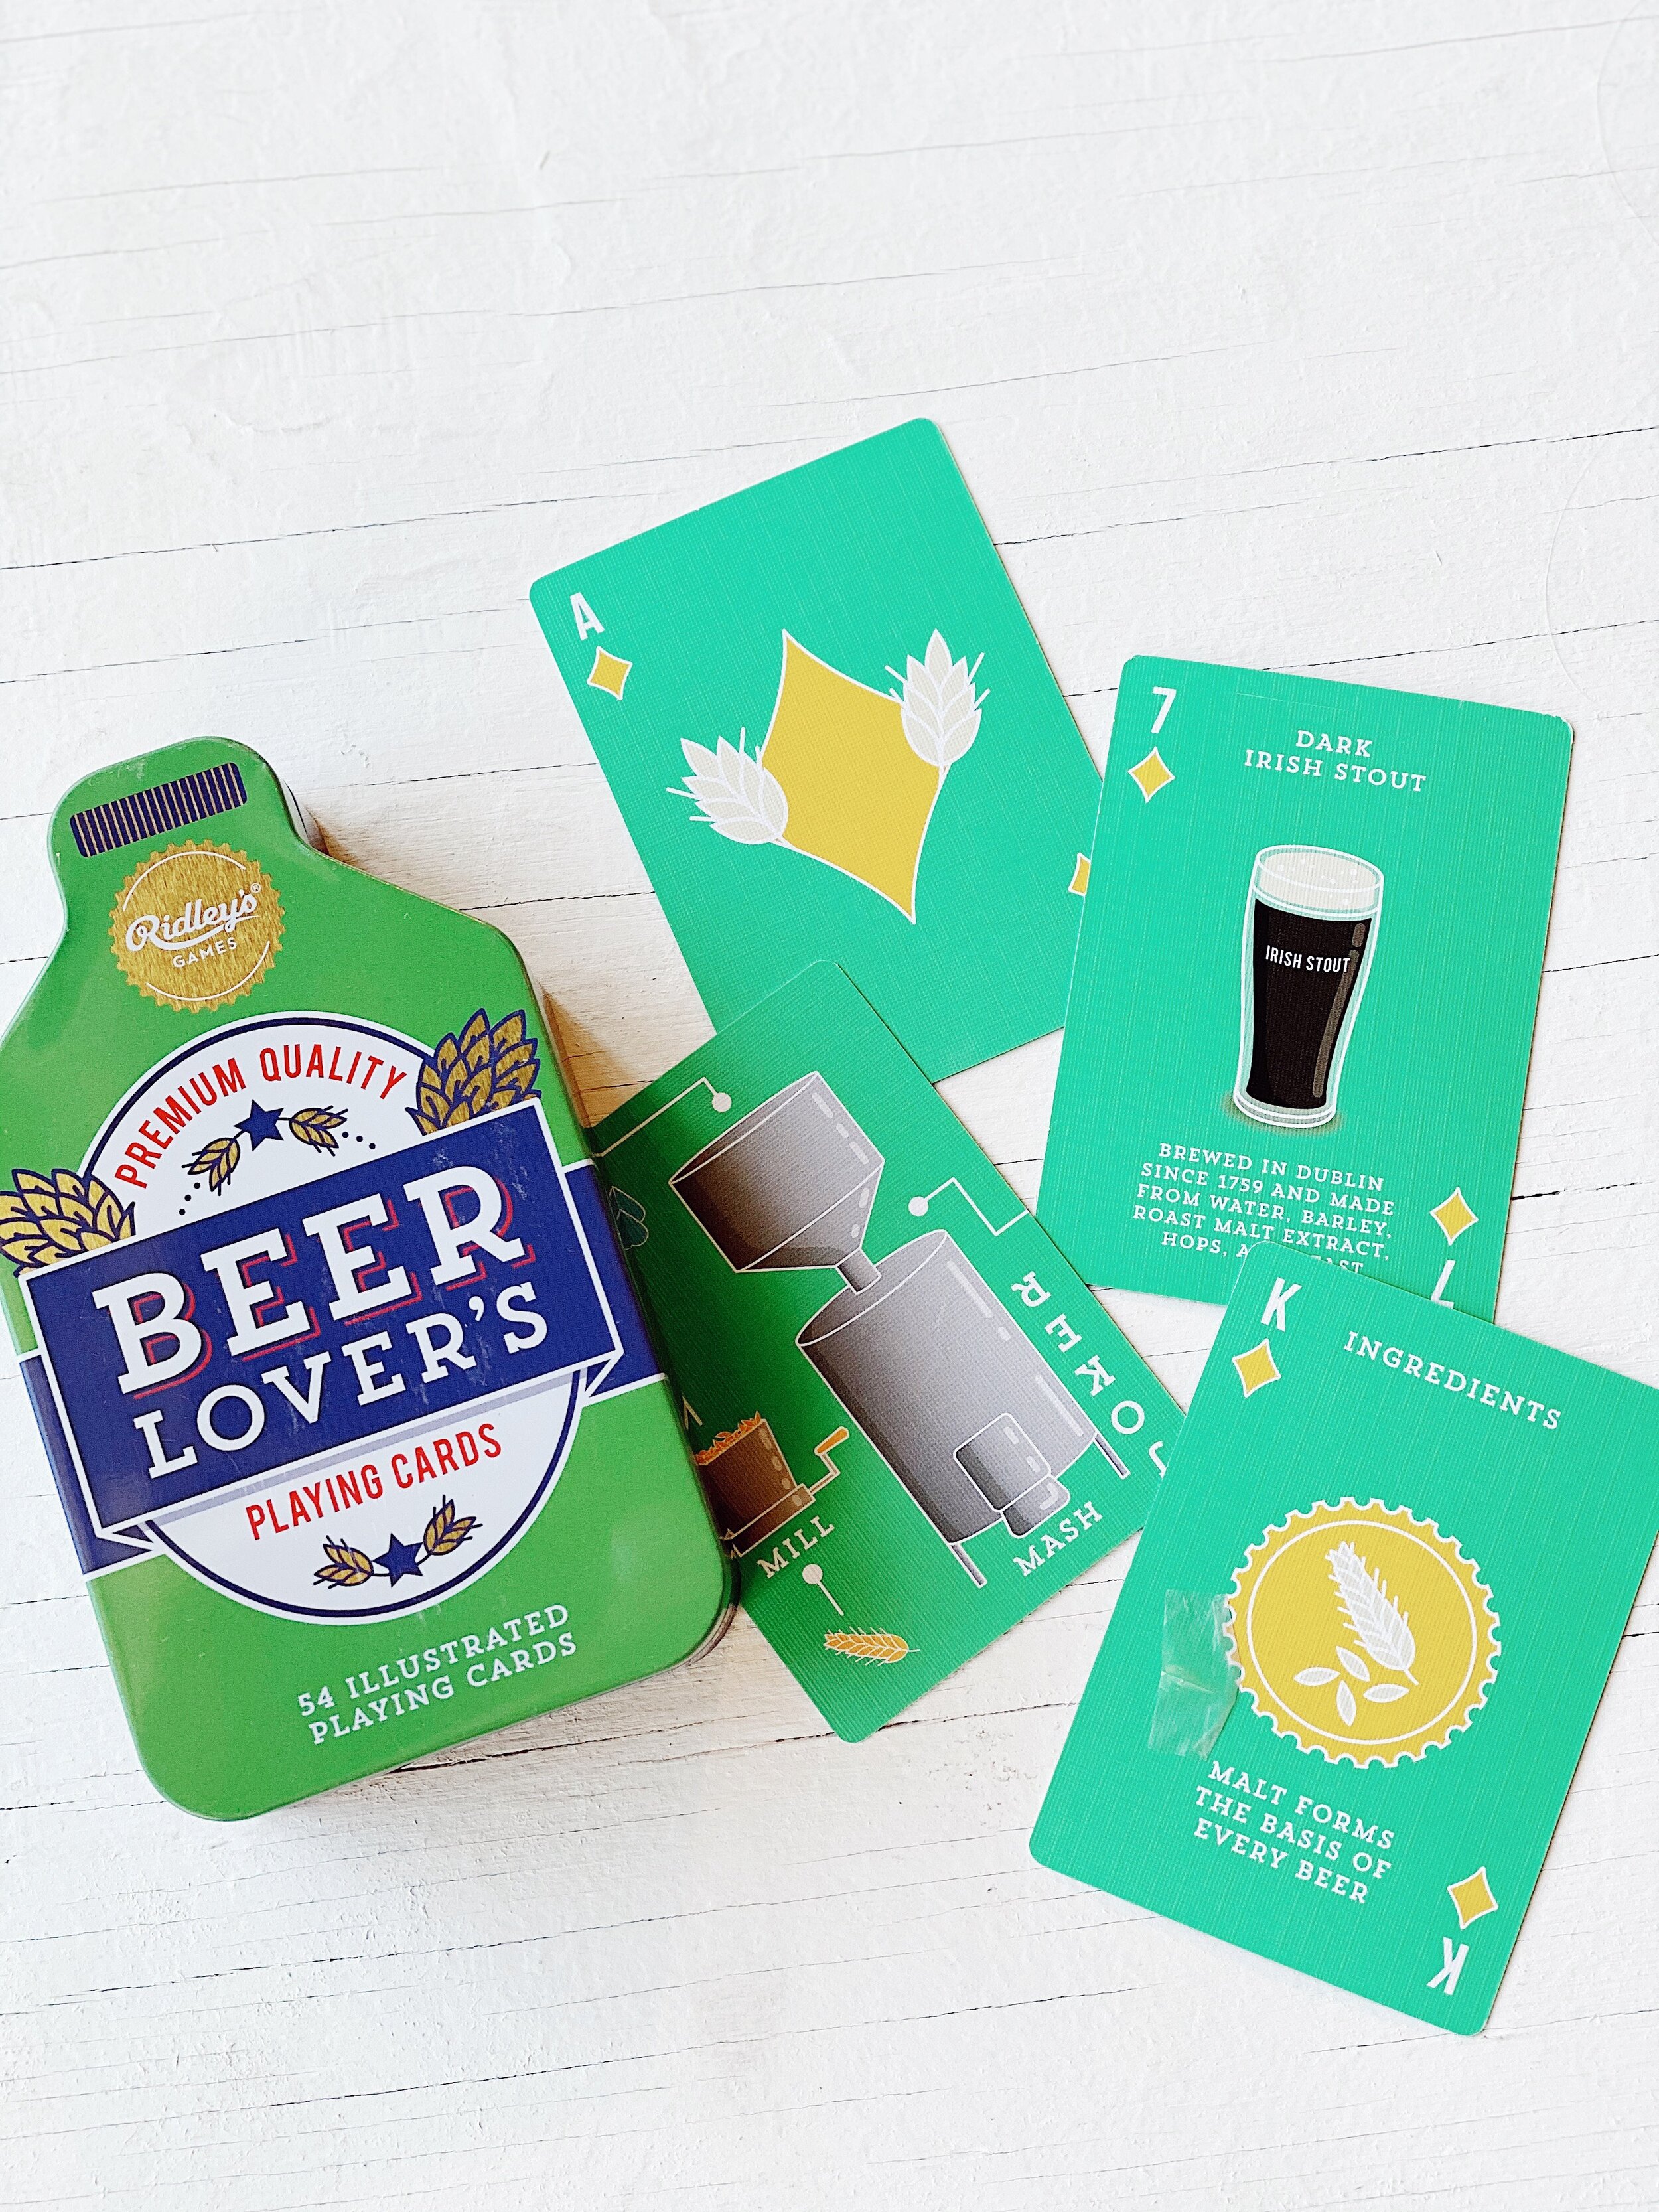 beerplayingcards.jpg